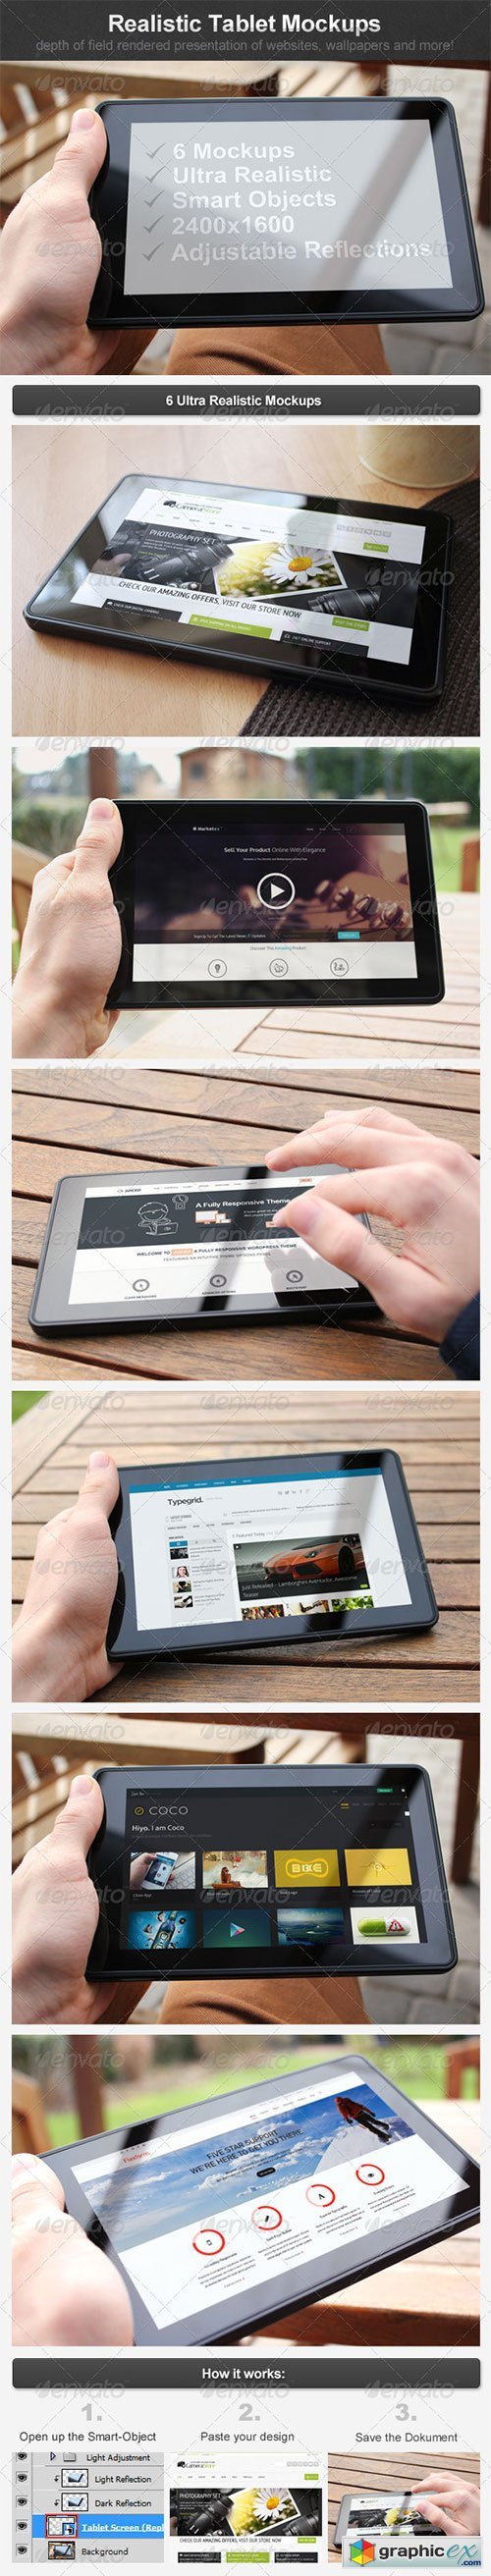 Realistic Tablet Mockups